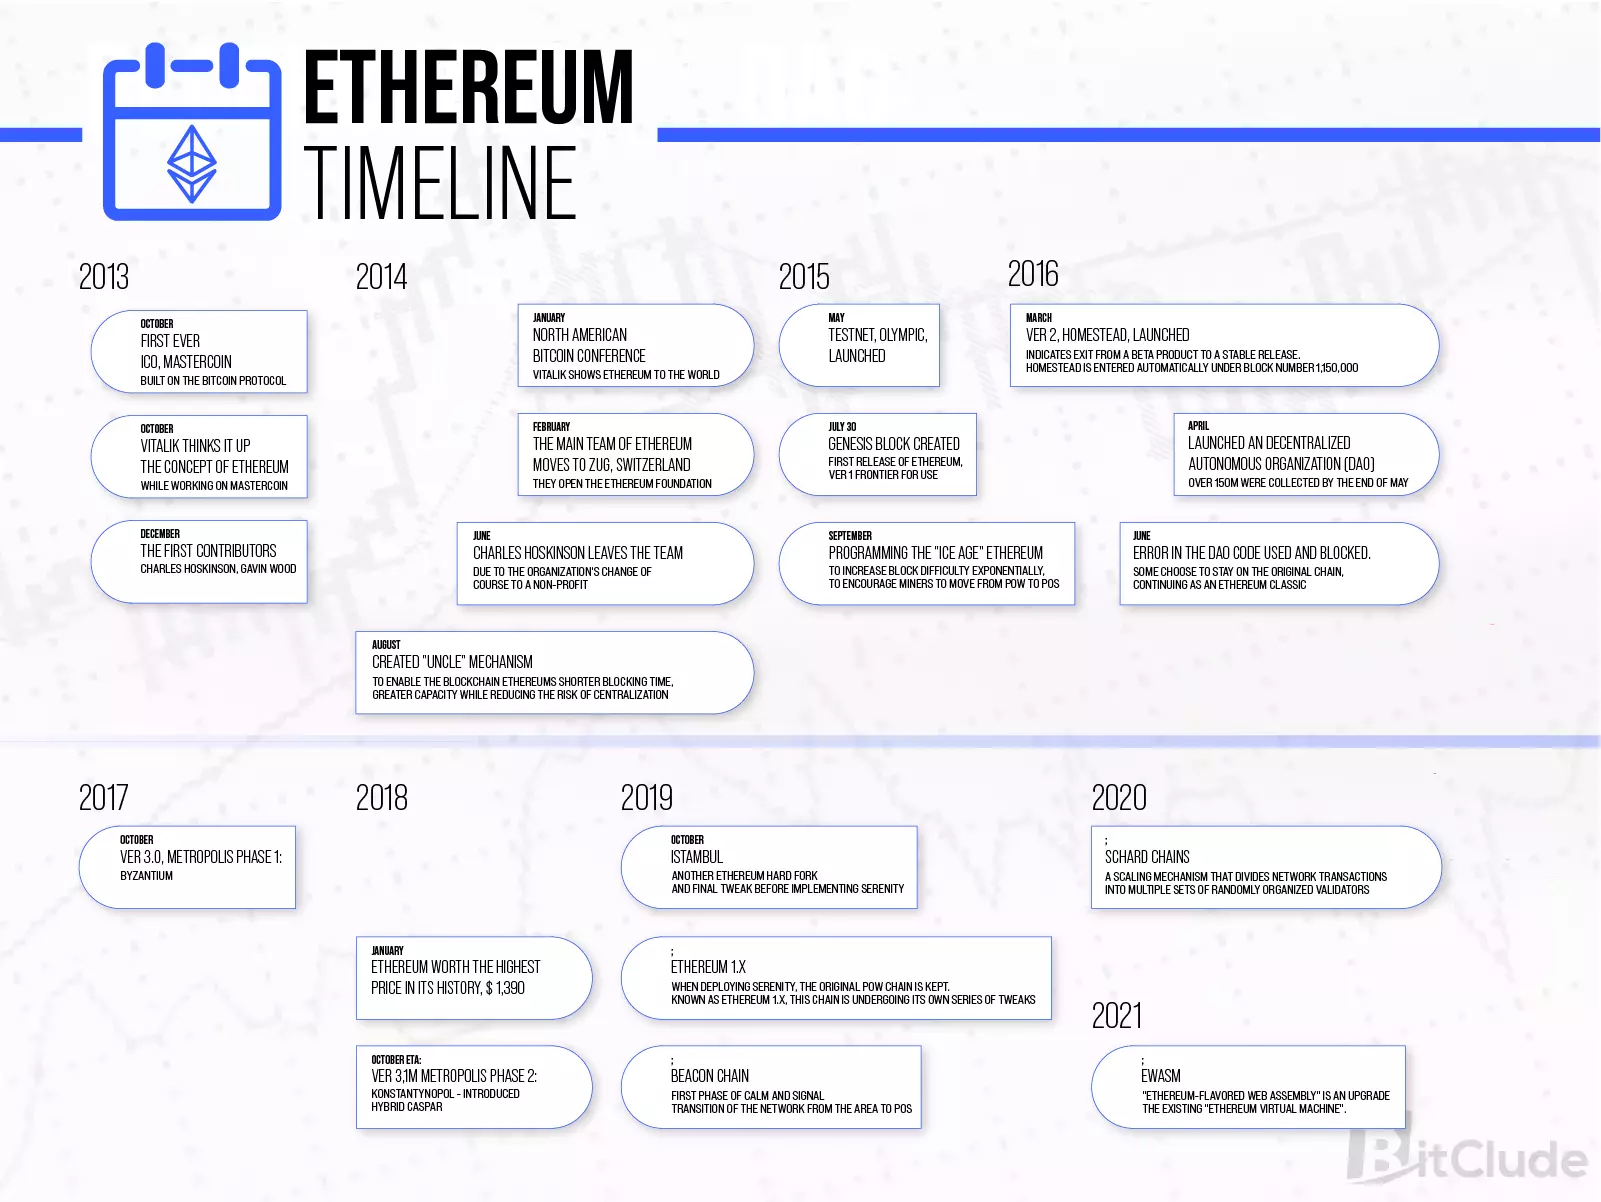 History of ethereum on timeline.